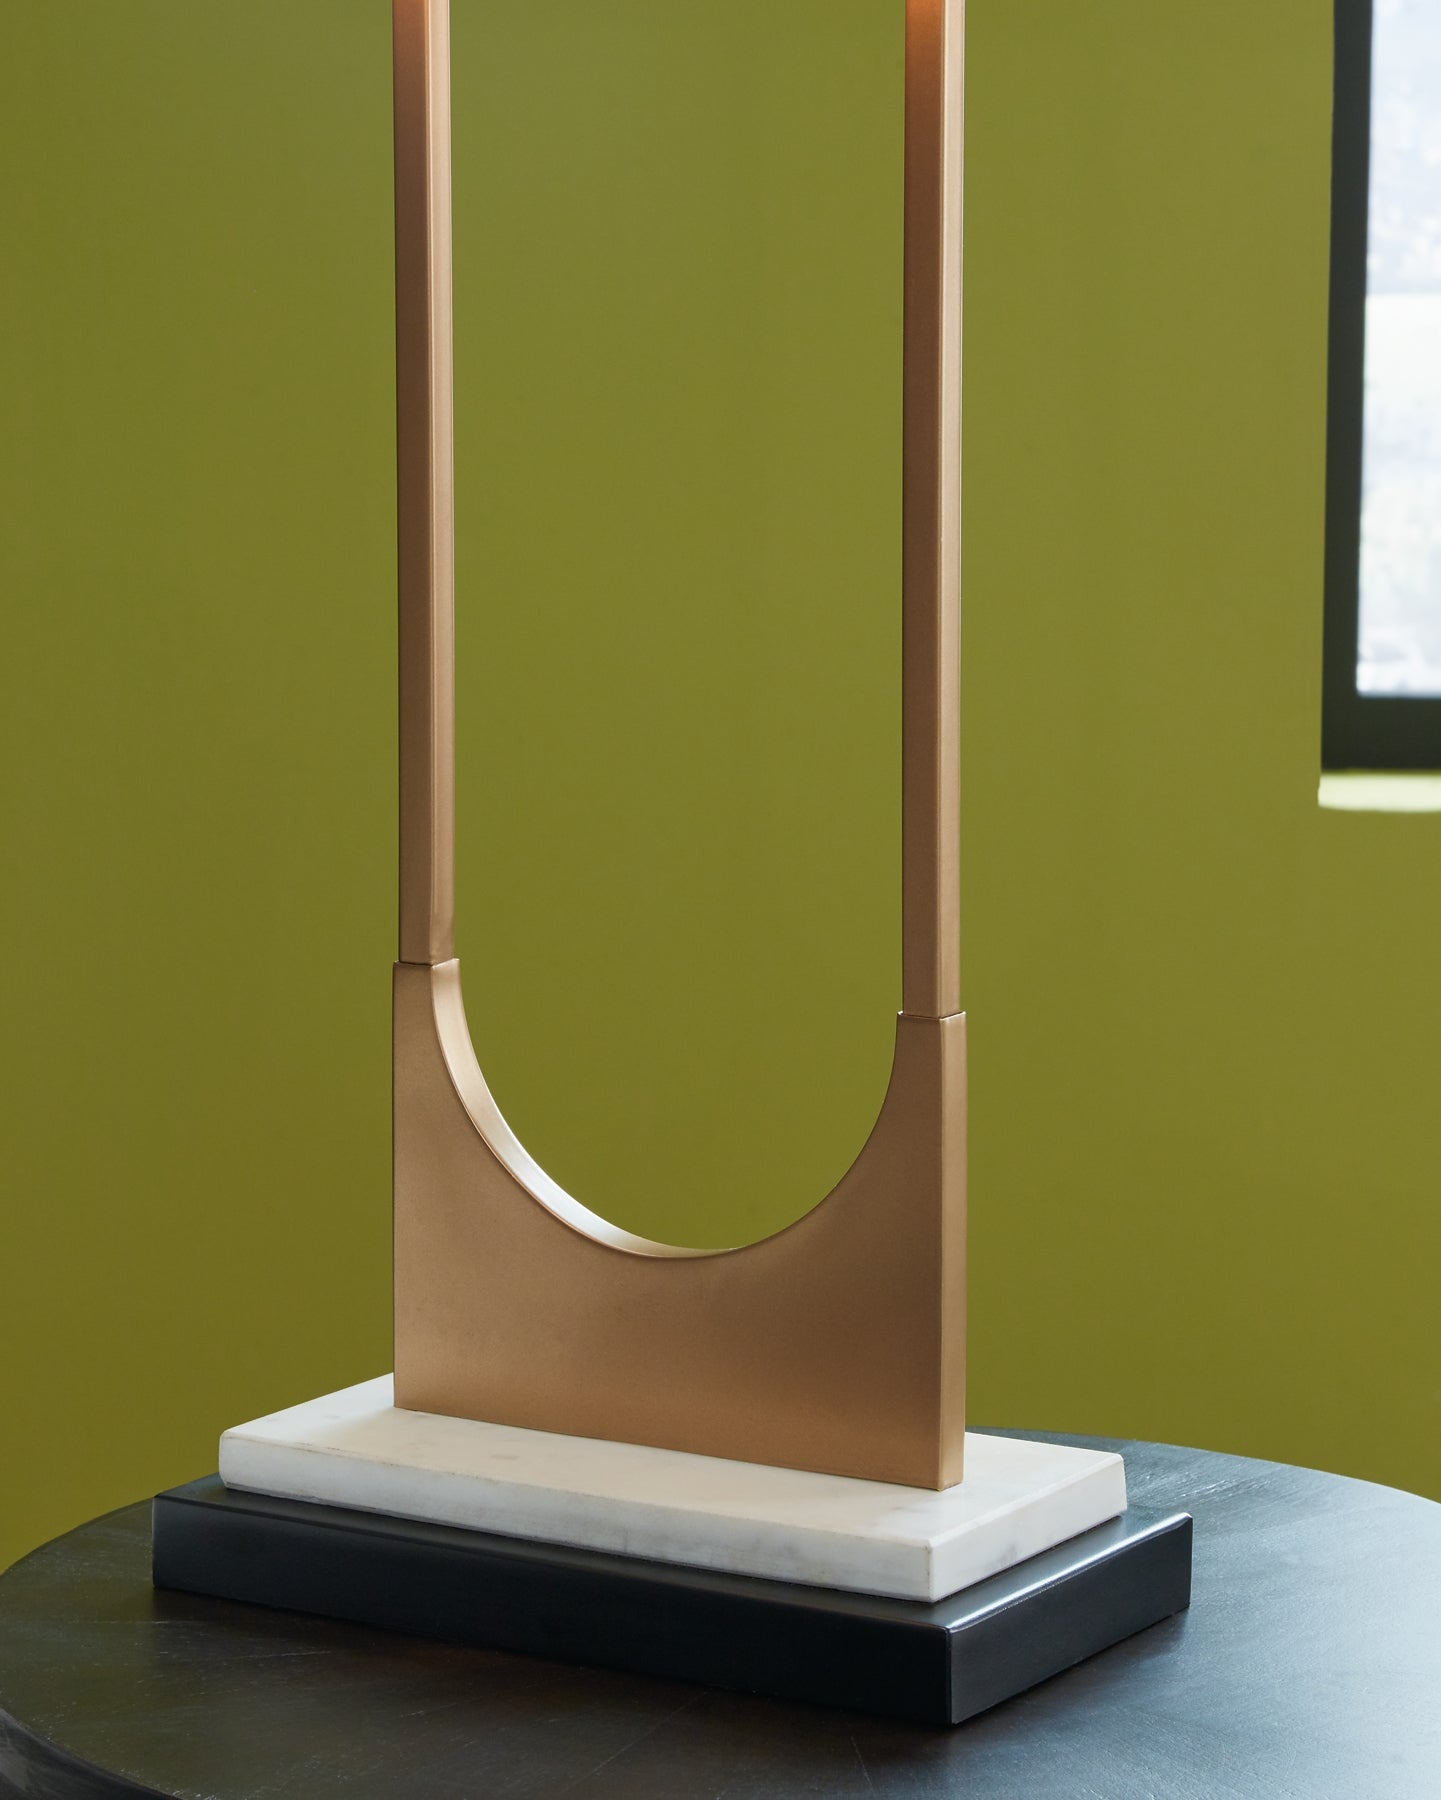 Malana Metal Table Lamp (1/CN) Smyrna Furniture Outlet